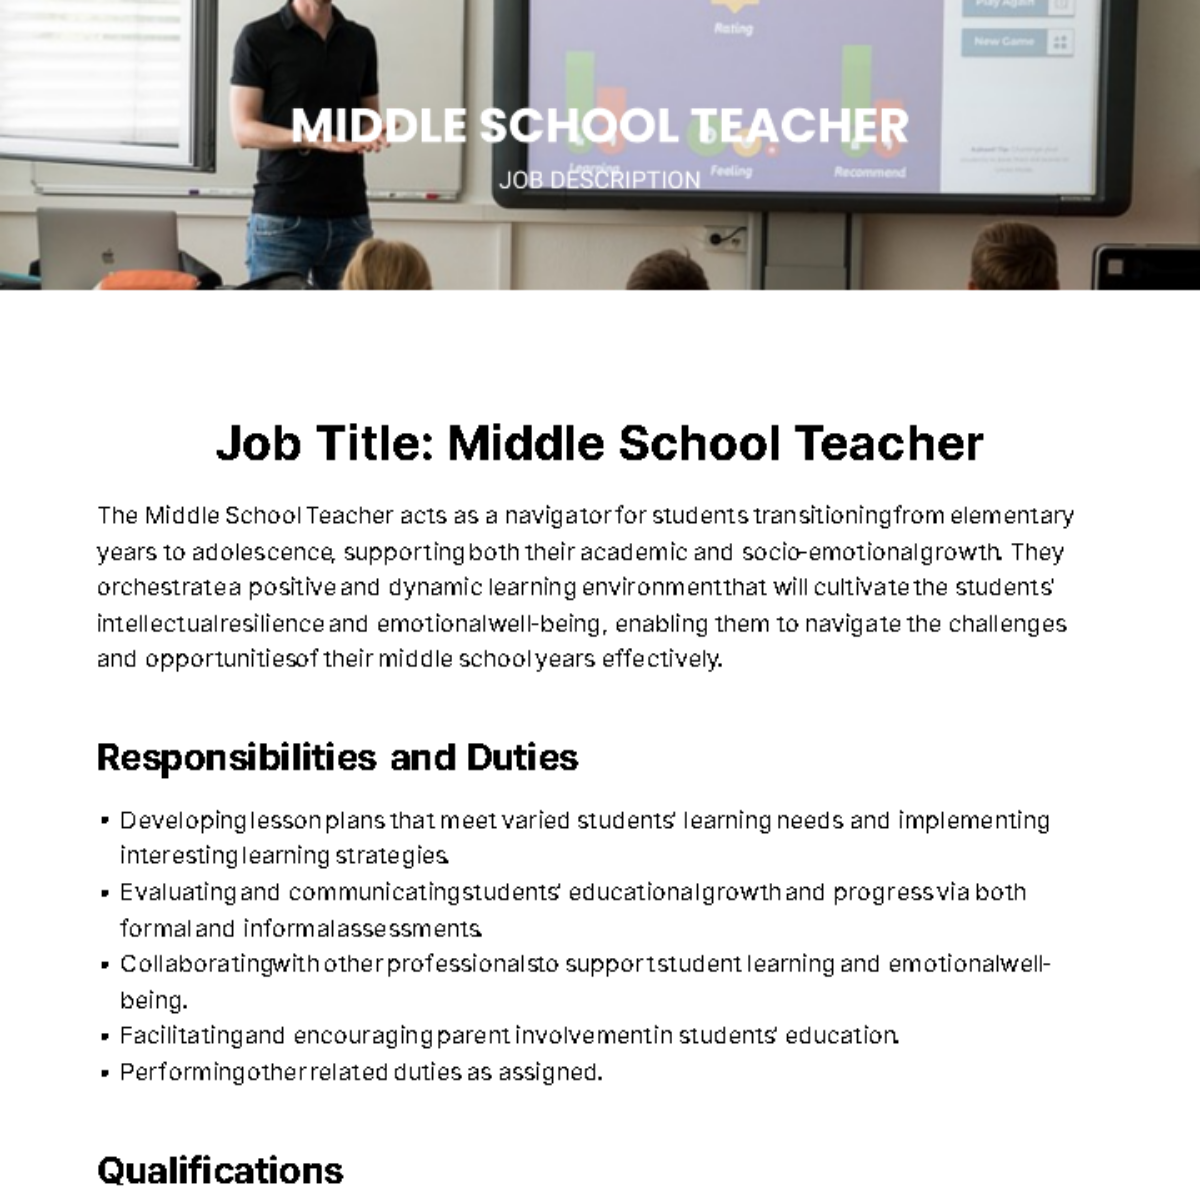 Middle School Teacher Job Description Template